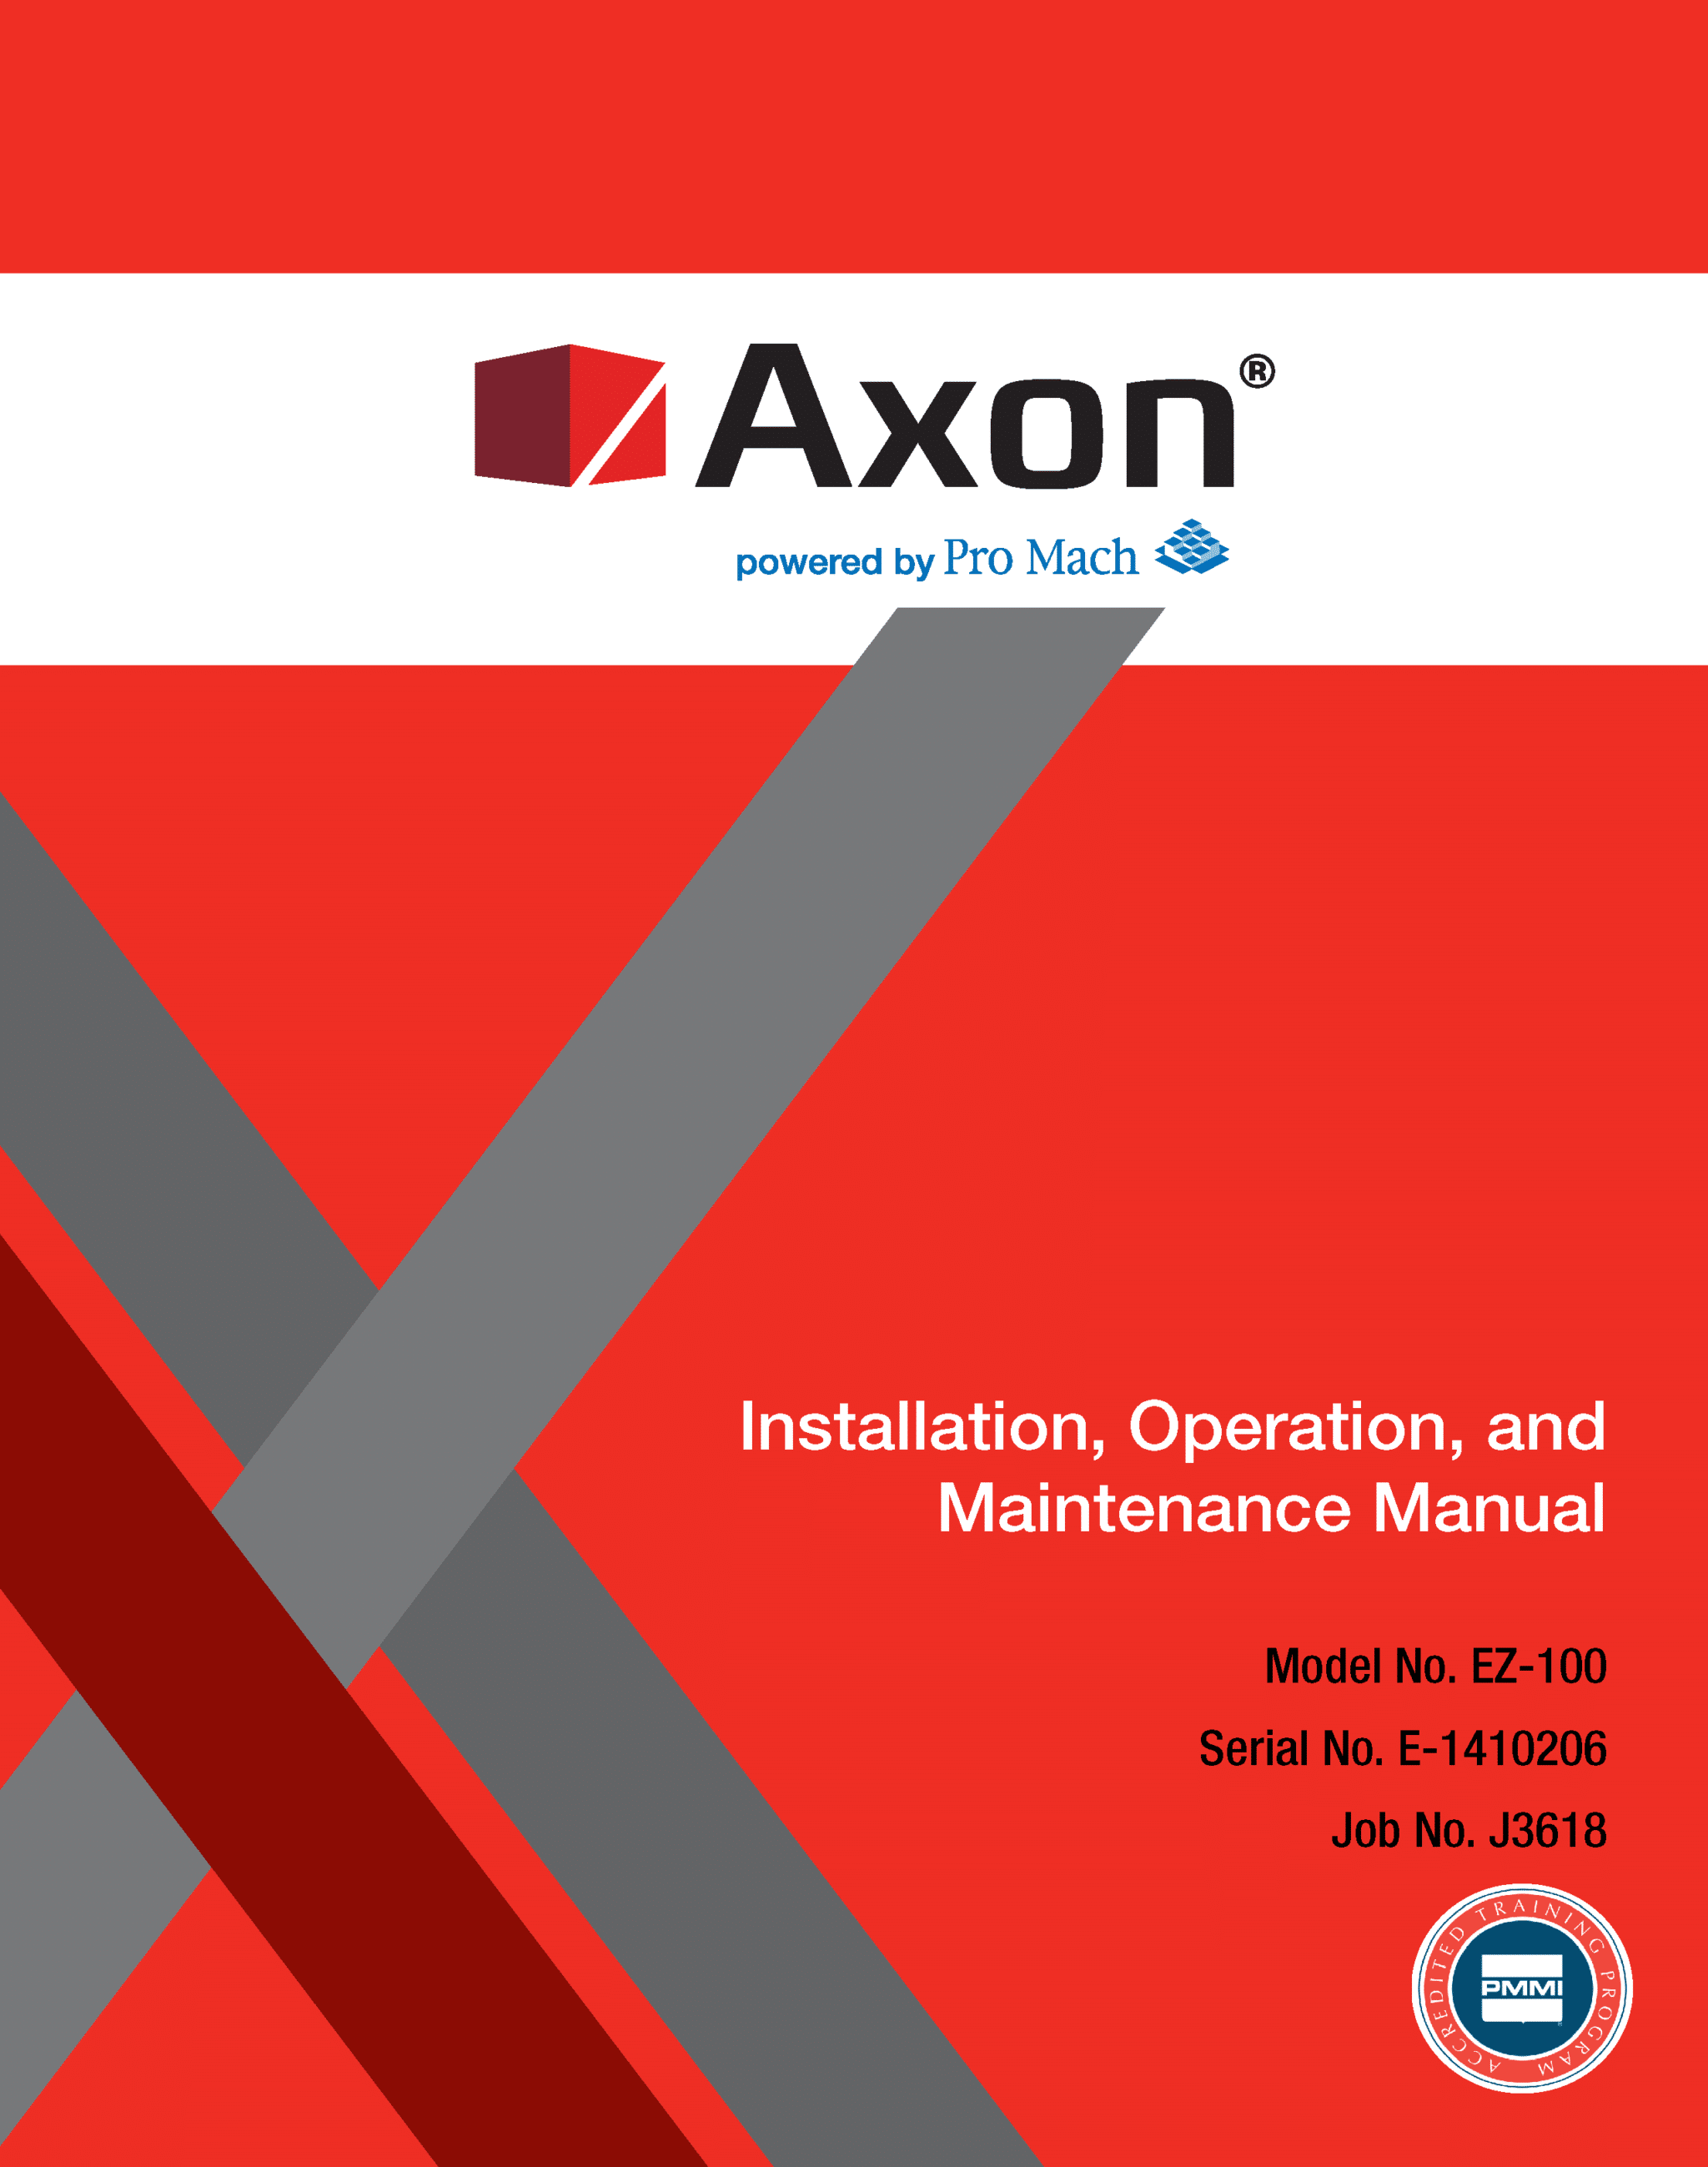 Axon Product Manual